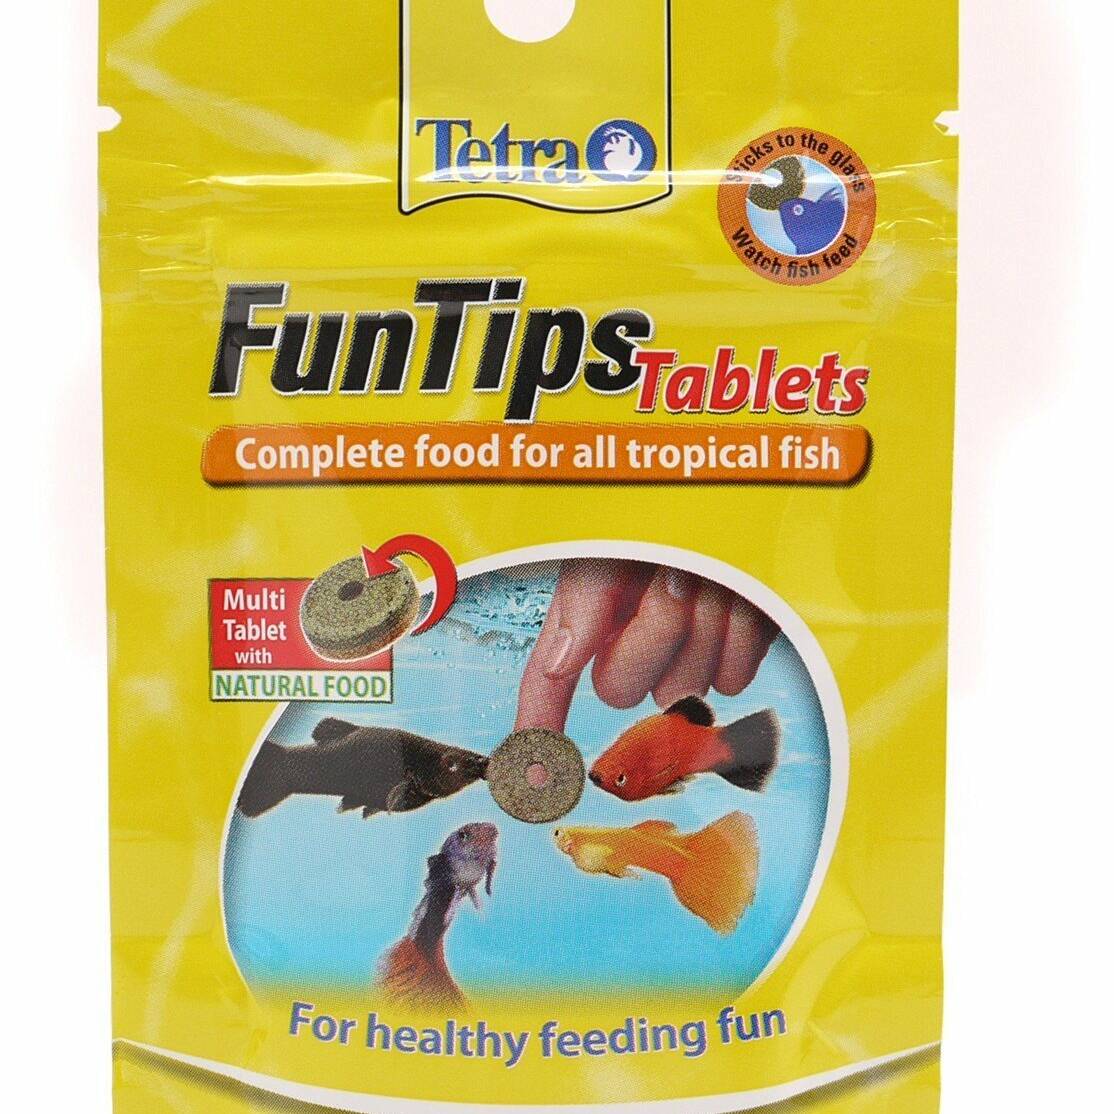 Tetra Fun Tip Tablets 30g